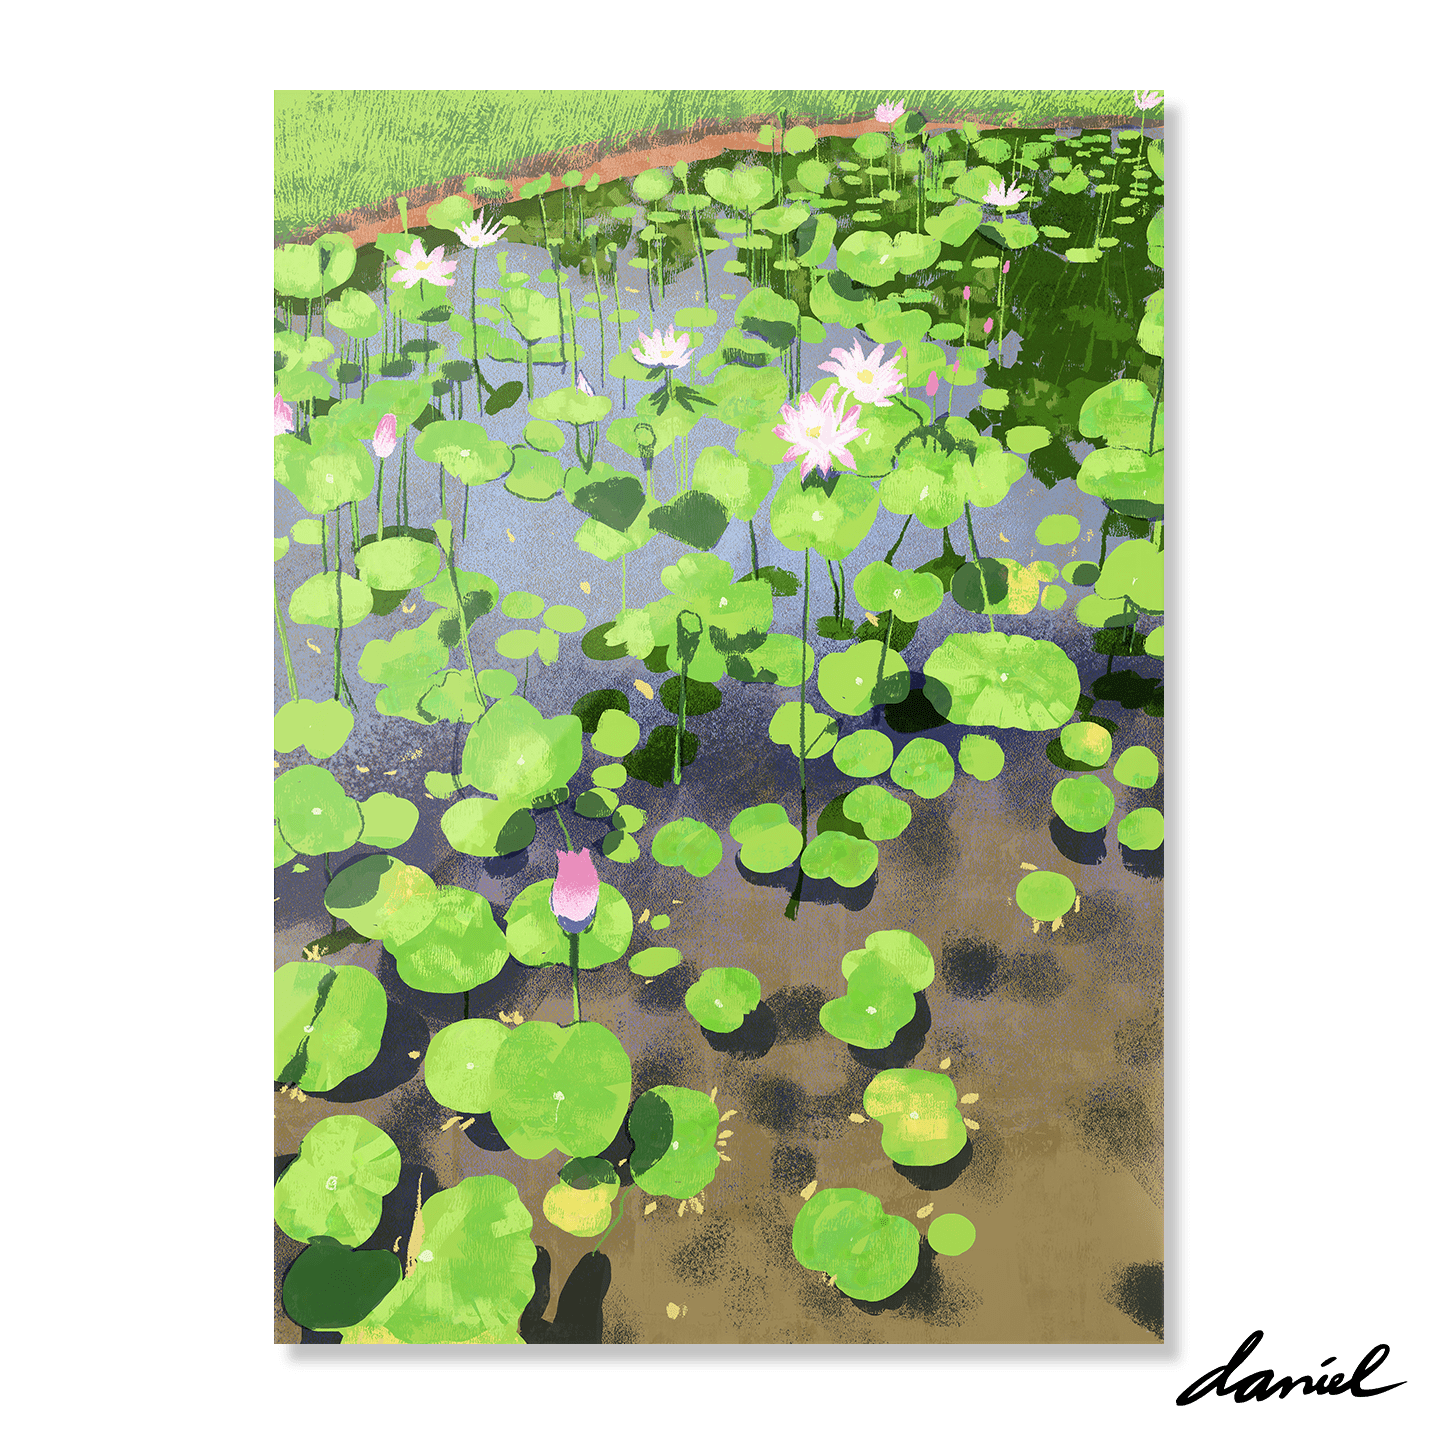 Blooming Lotus Pond